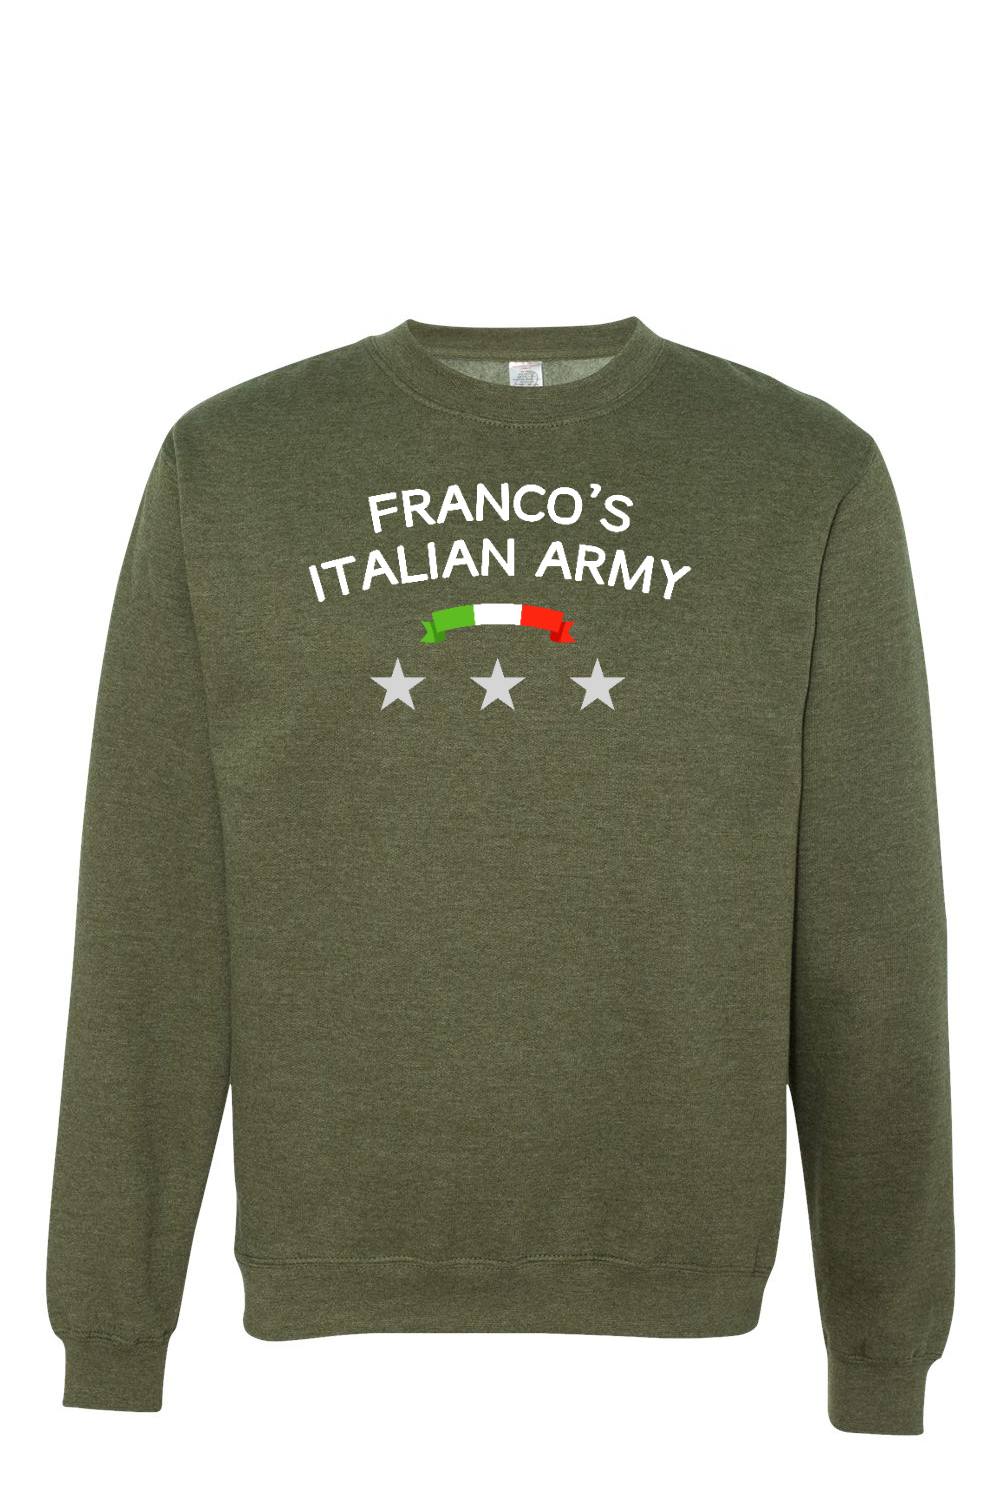 Franco's Italian Army - Premium Crewneck Sweatshirt